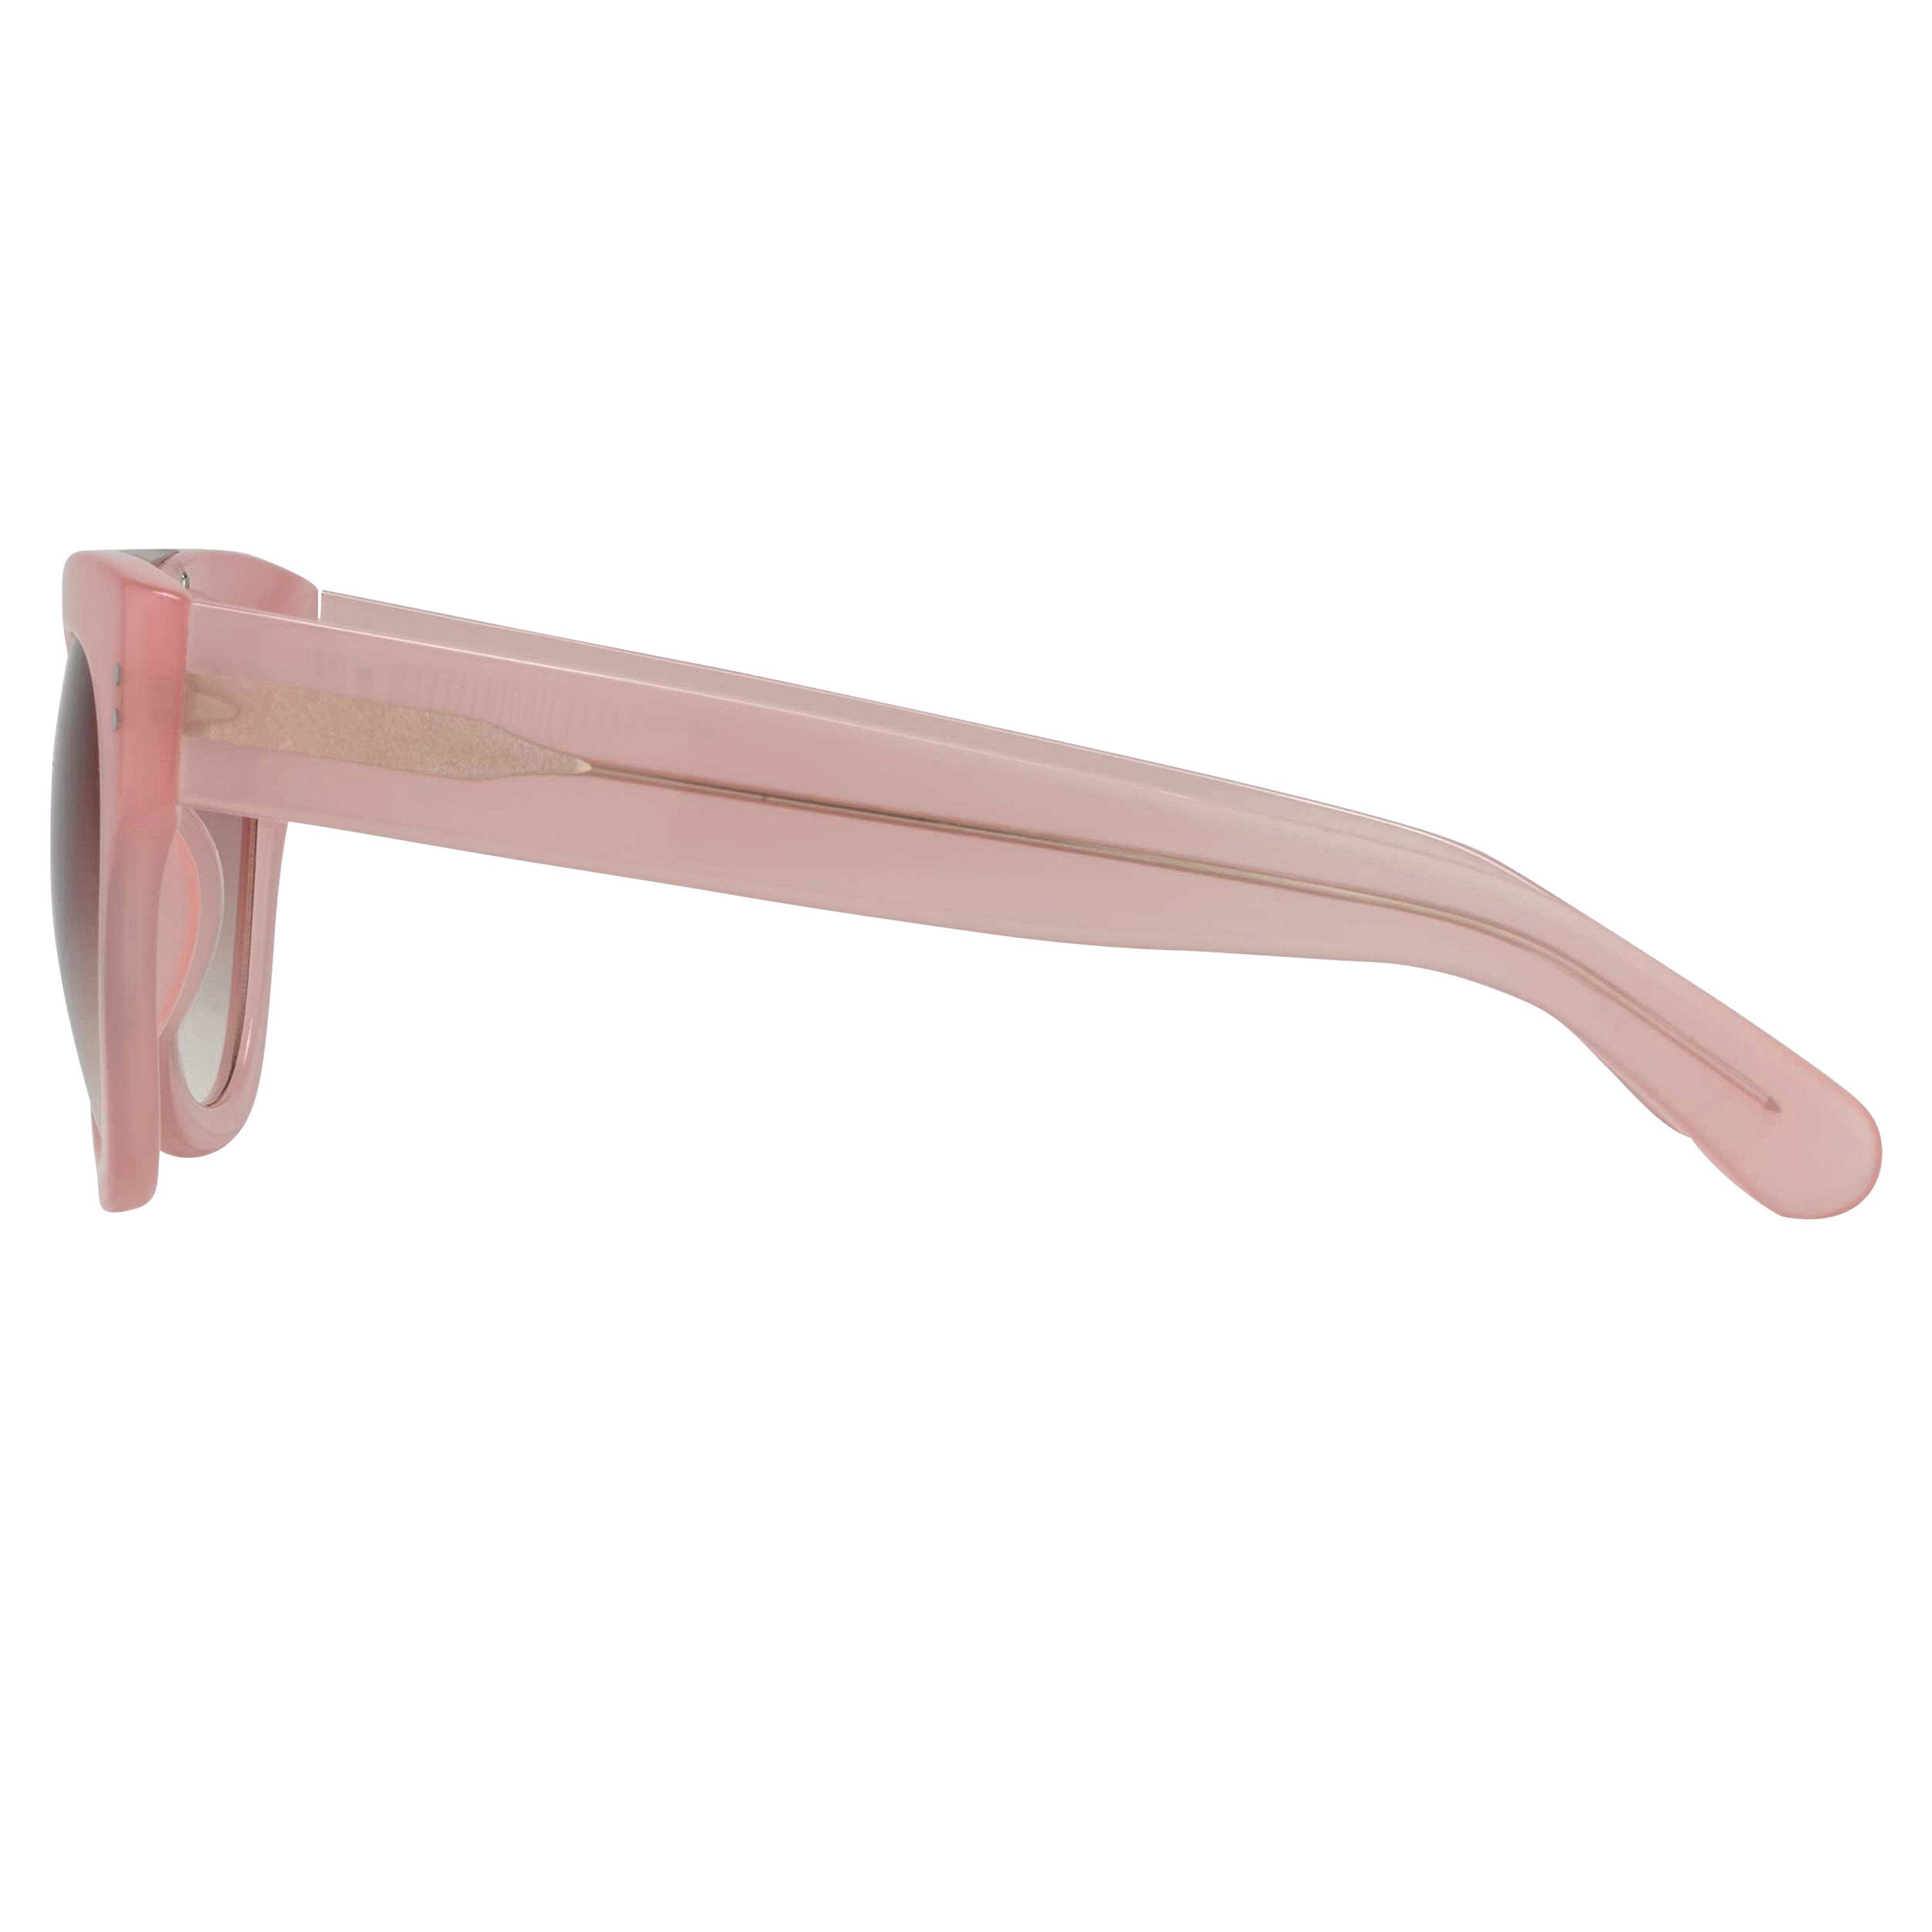 Color_EDM11C5SUN - Erdem 11 C5 D-Frame Sunglasses